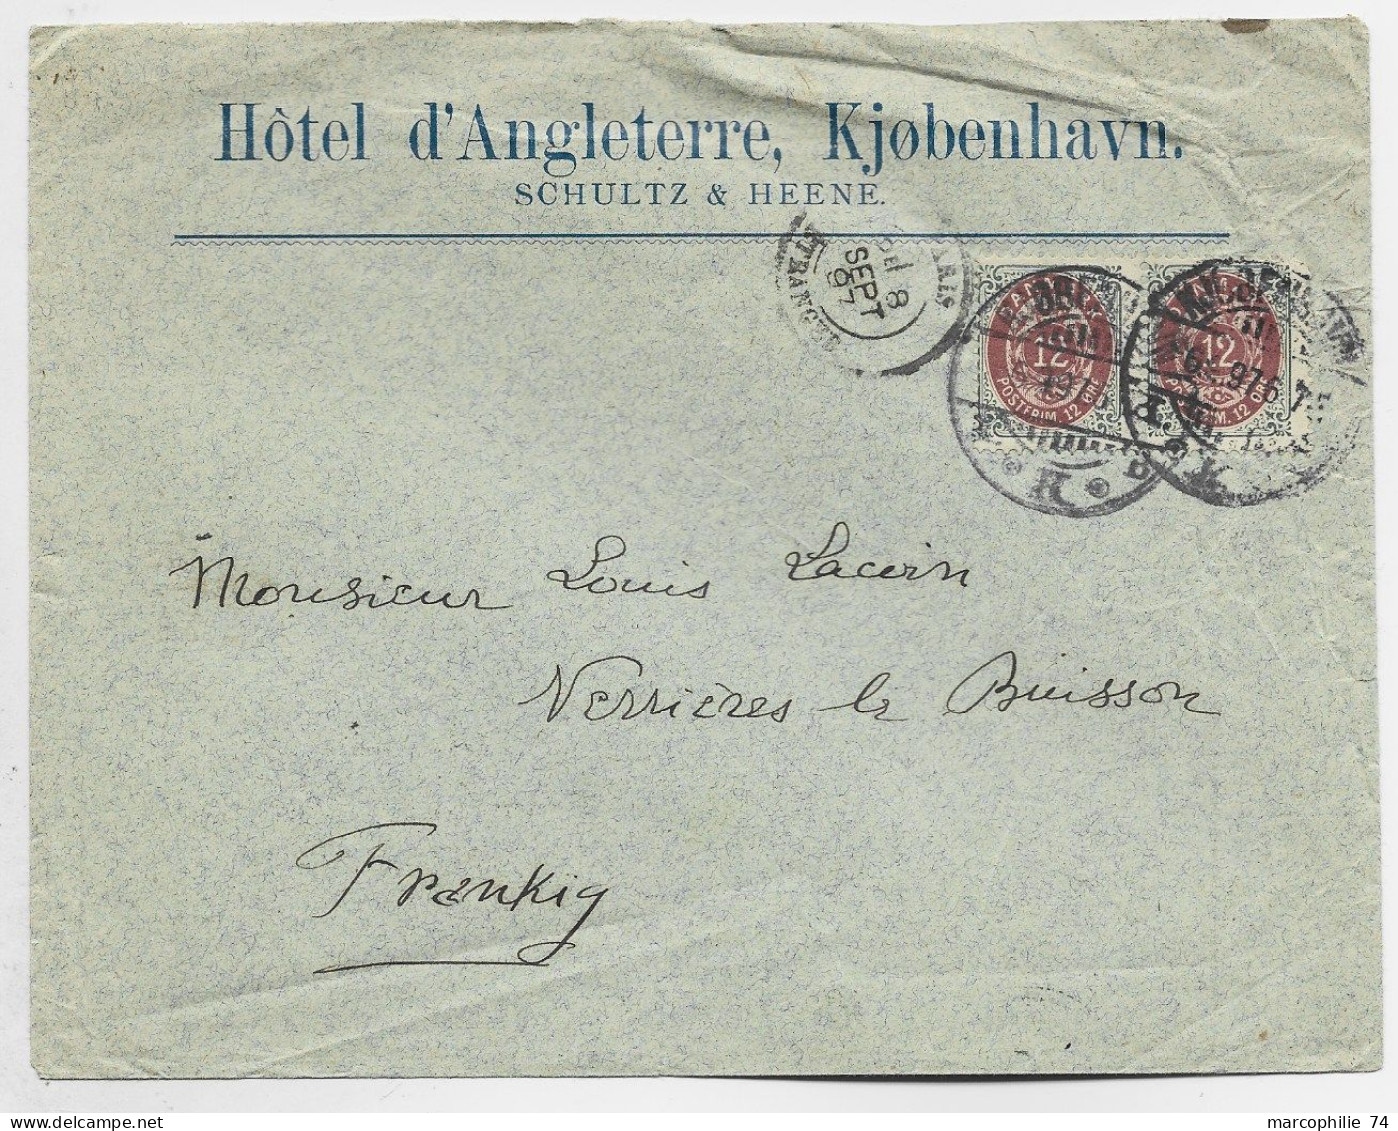 DANMARK 12 ORE PAIRE LETTRE COVER ENTETE HOTEL D'ANGLETERRE 1897  TO FRANCE - Briefe U. Dokumente